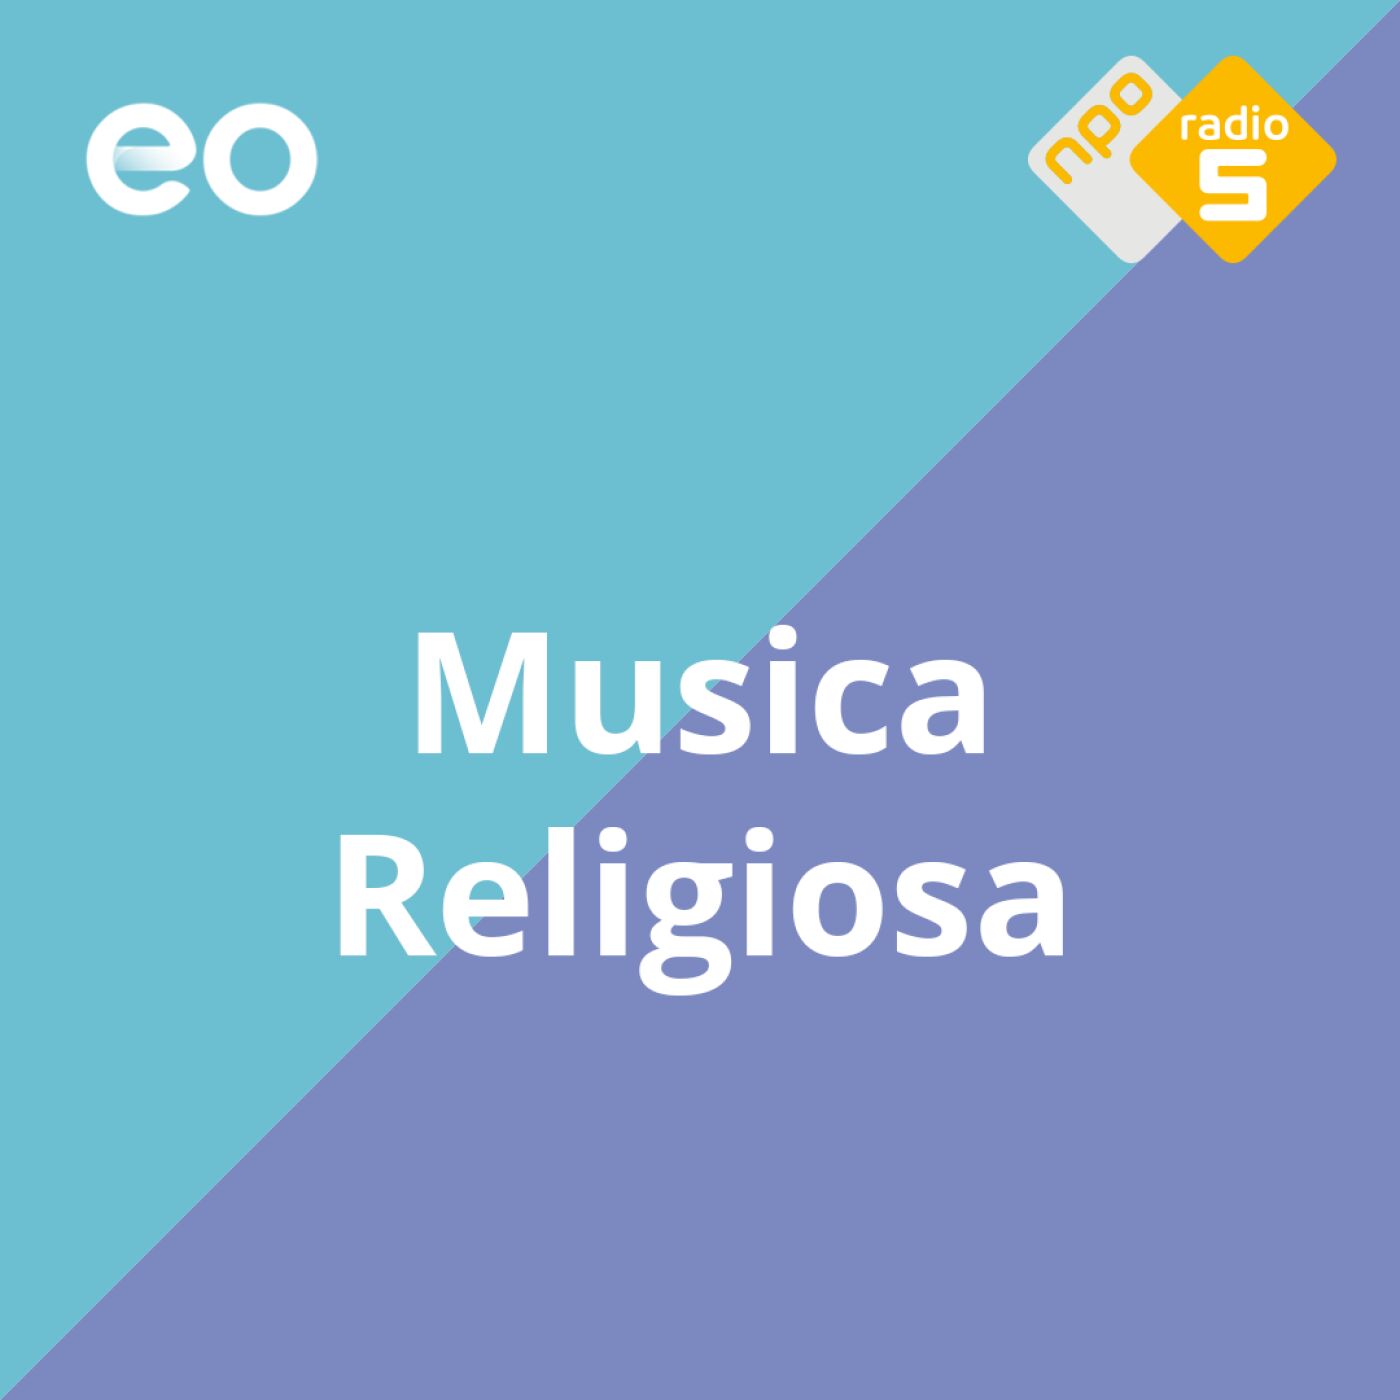 Musica Religiosa logo